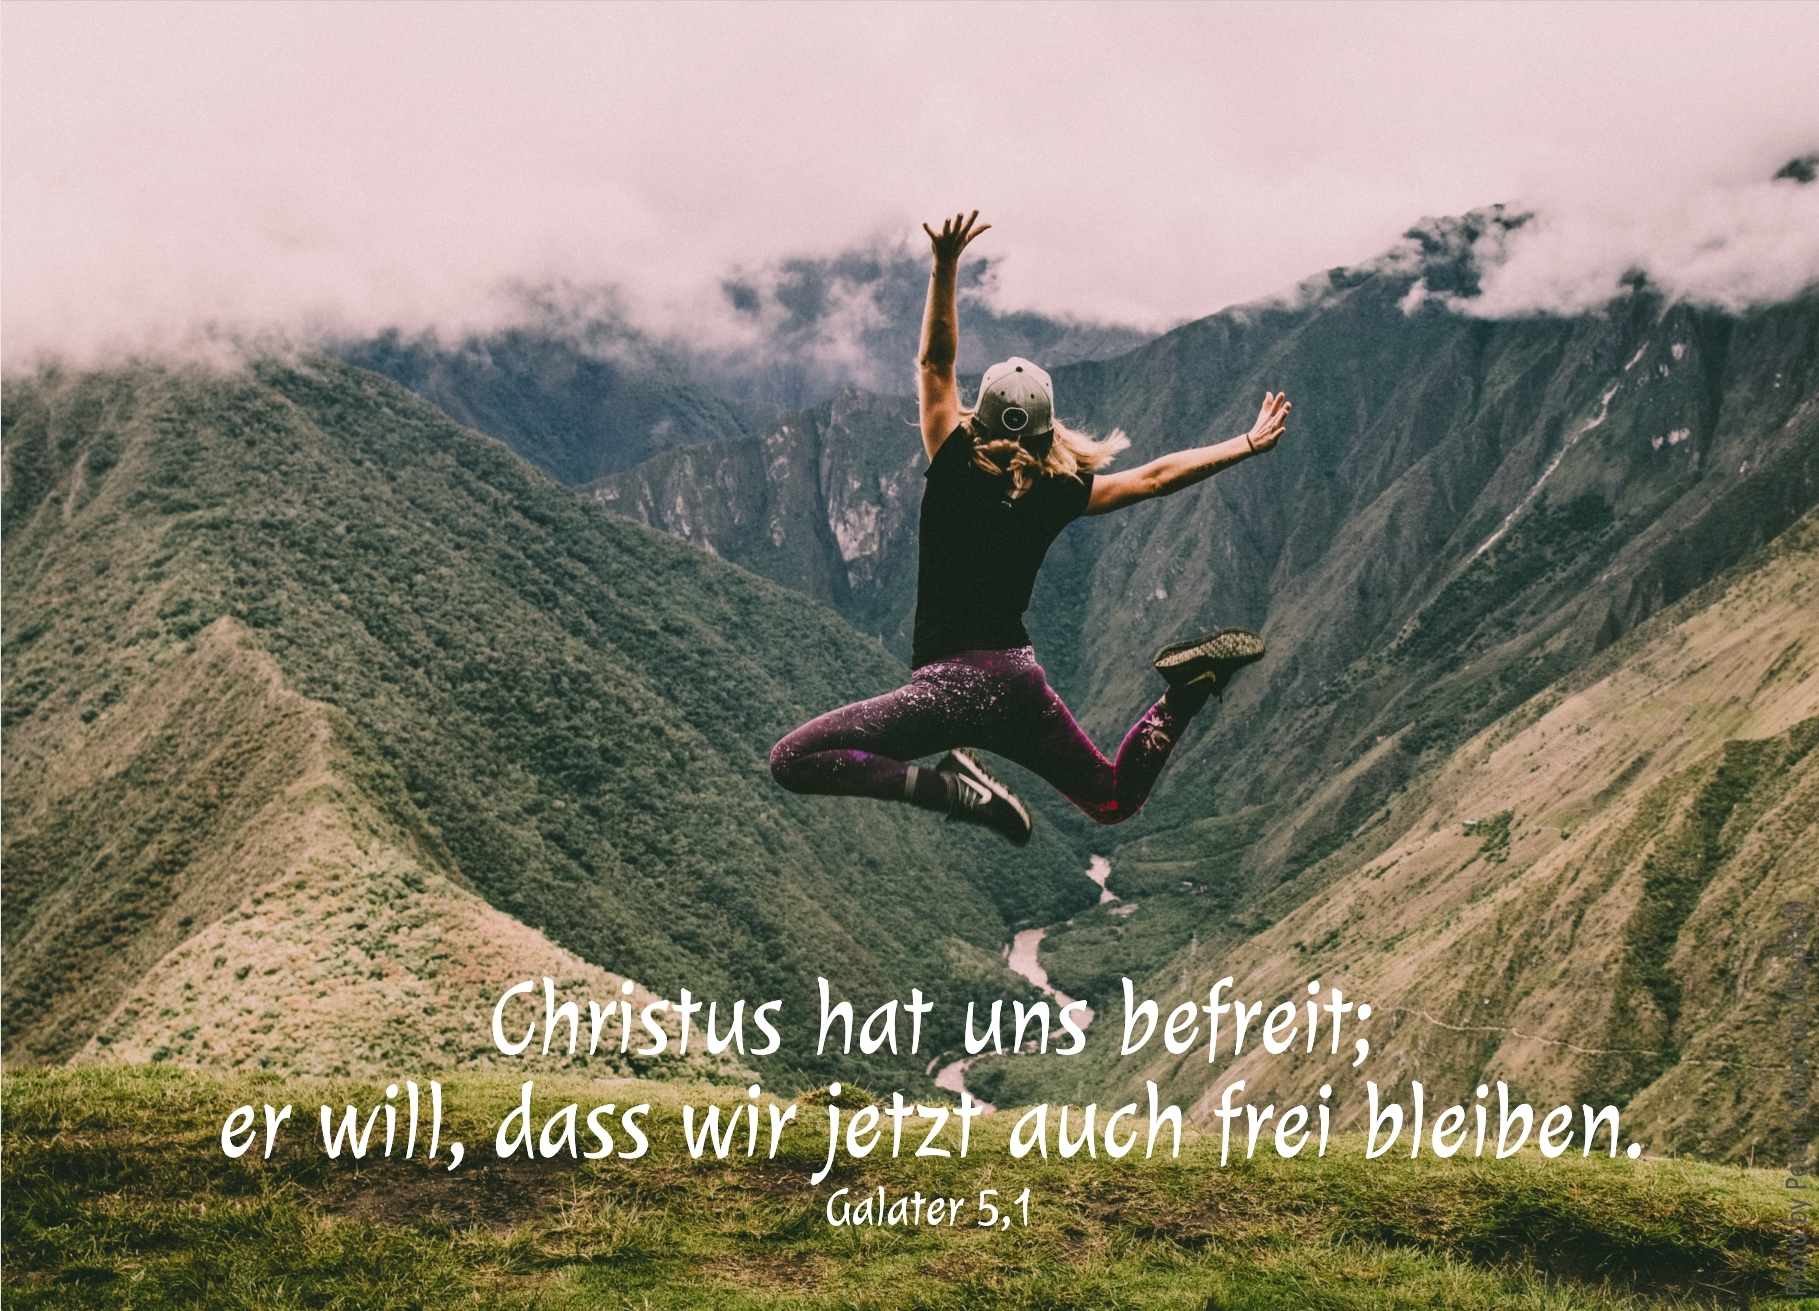 alt="springende_person_vor_berglandschaft_erwartet_bibelhoerbuch_freiheit"